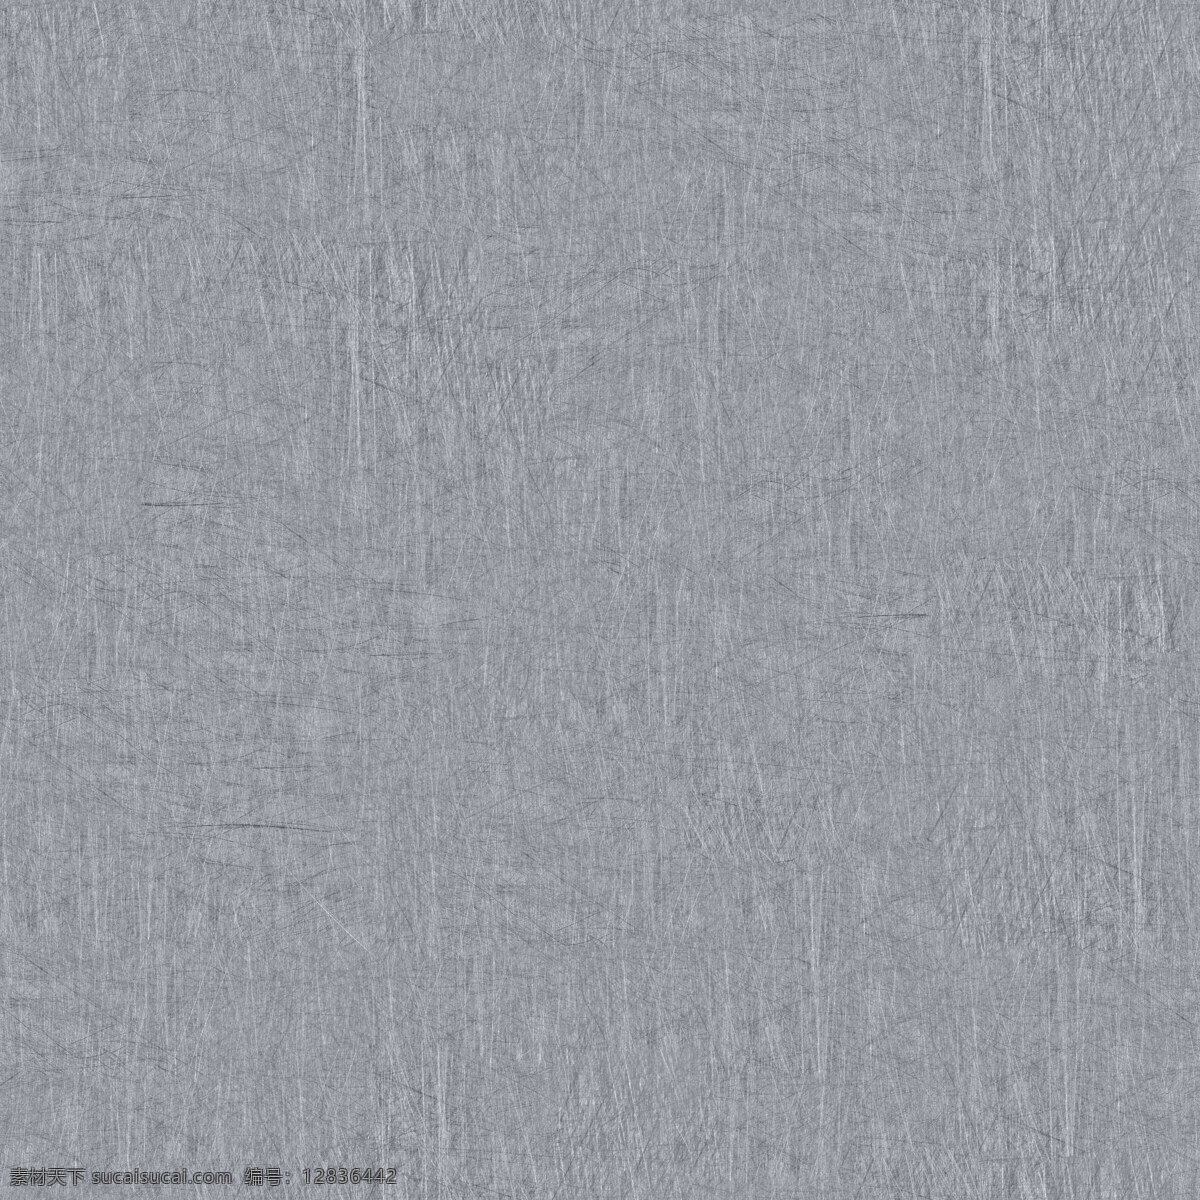 vray 浅蓝色 金属 材质 max9 划痕 有贴图 3d模型素材 材质贴图